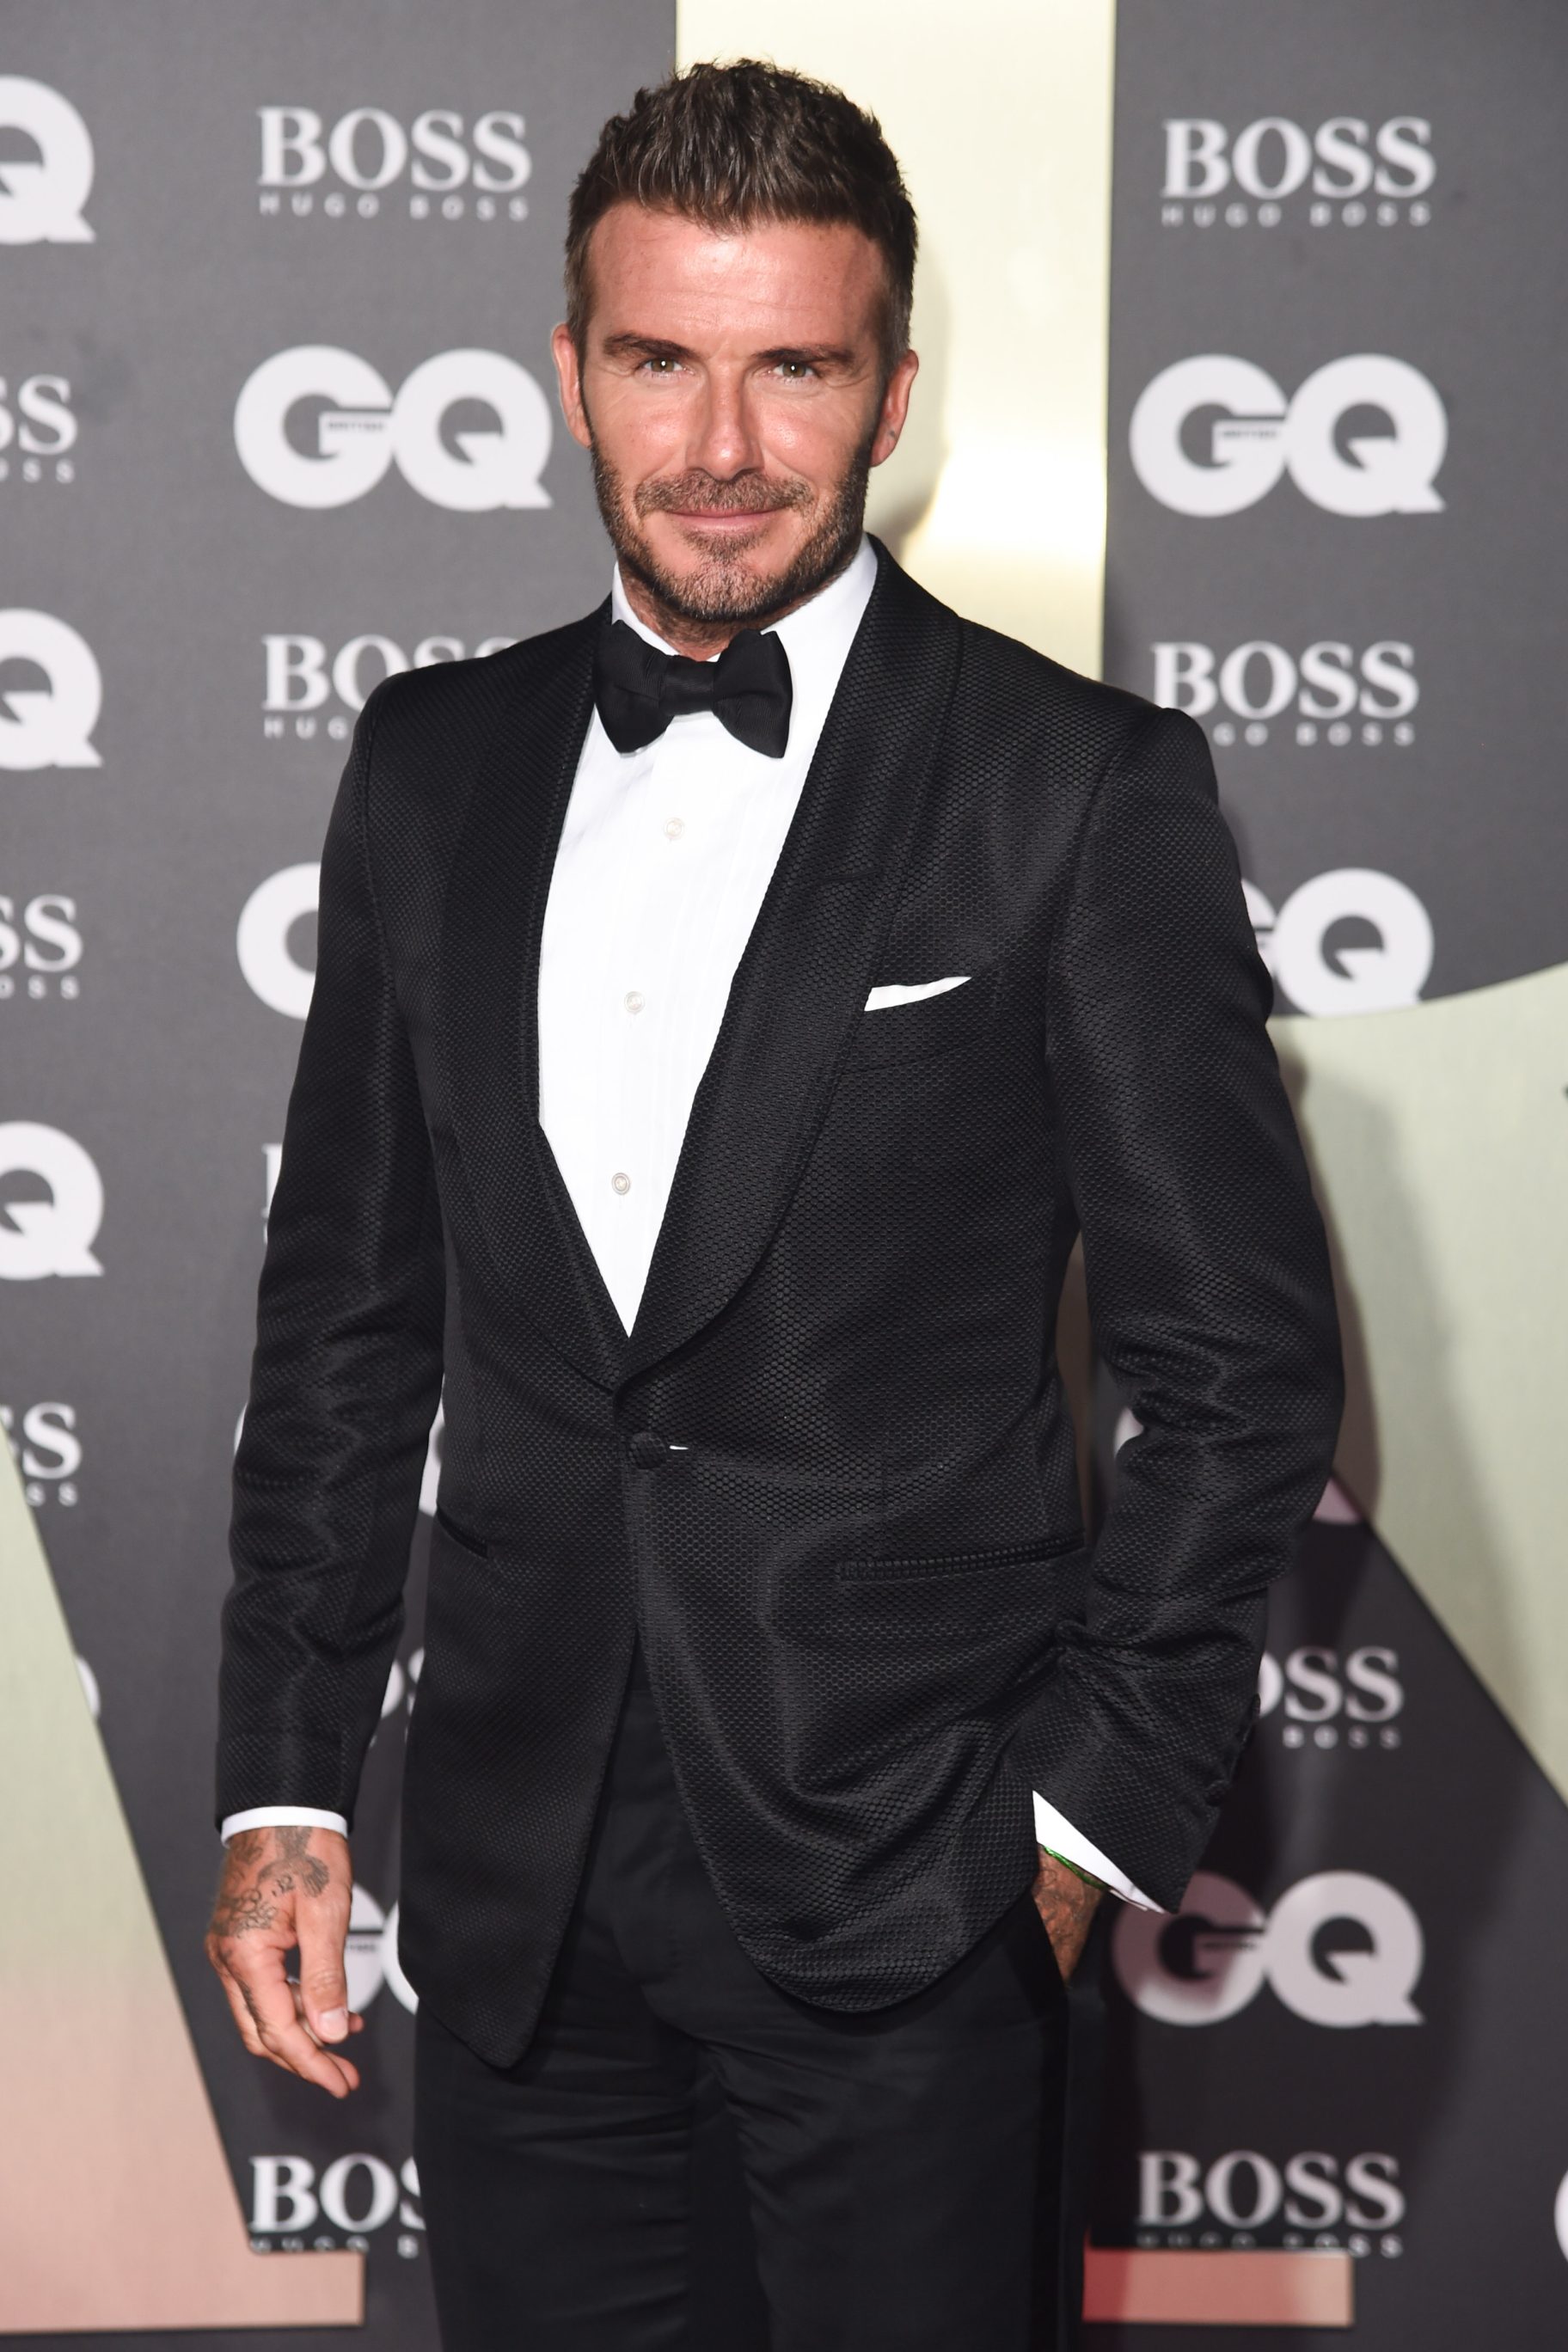 David Beckham – Former British